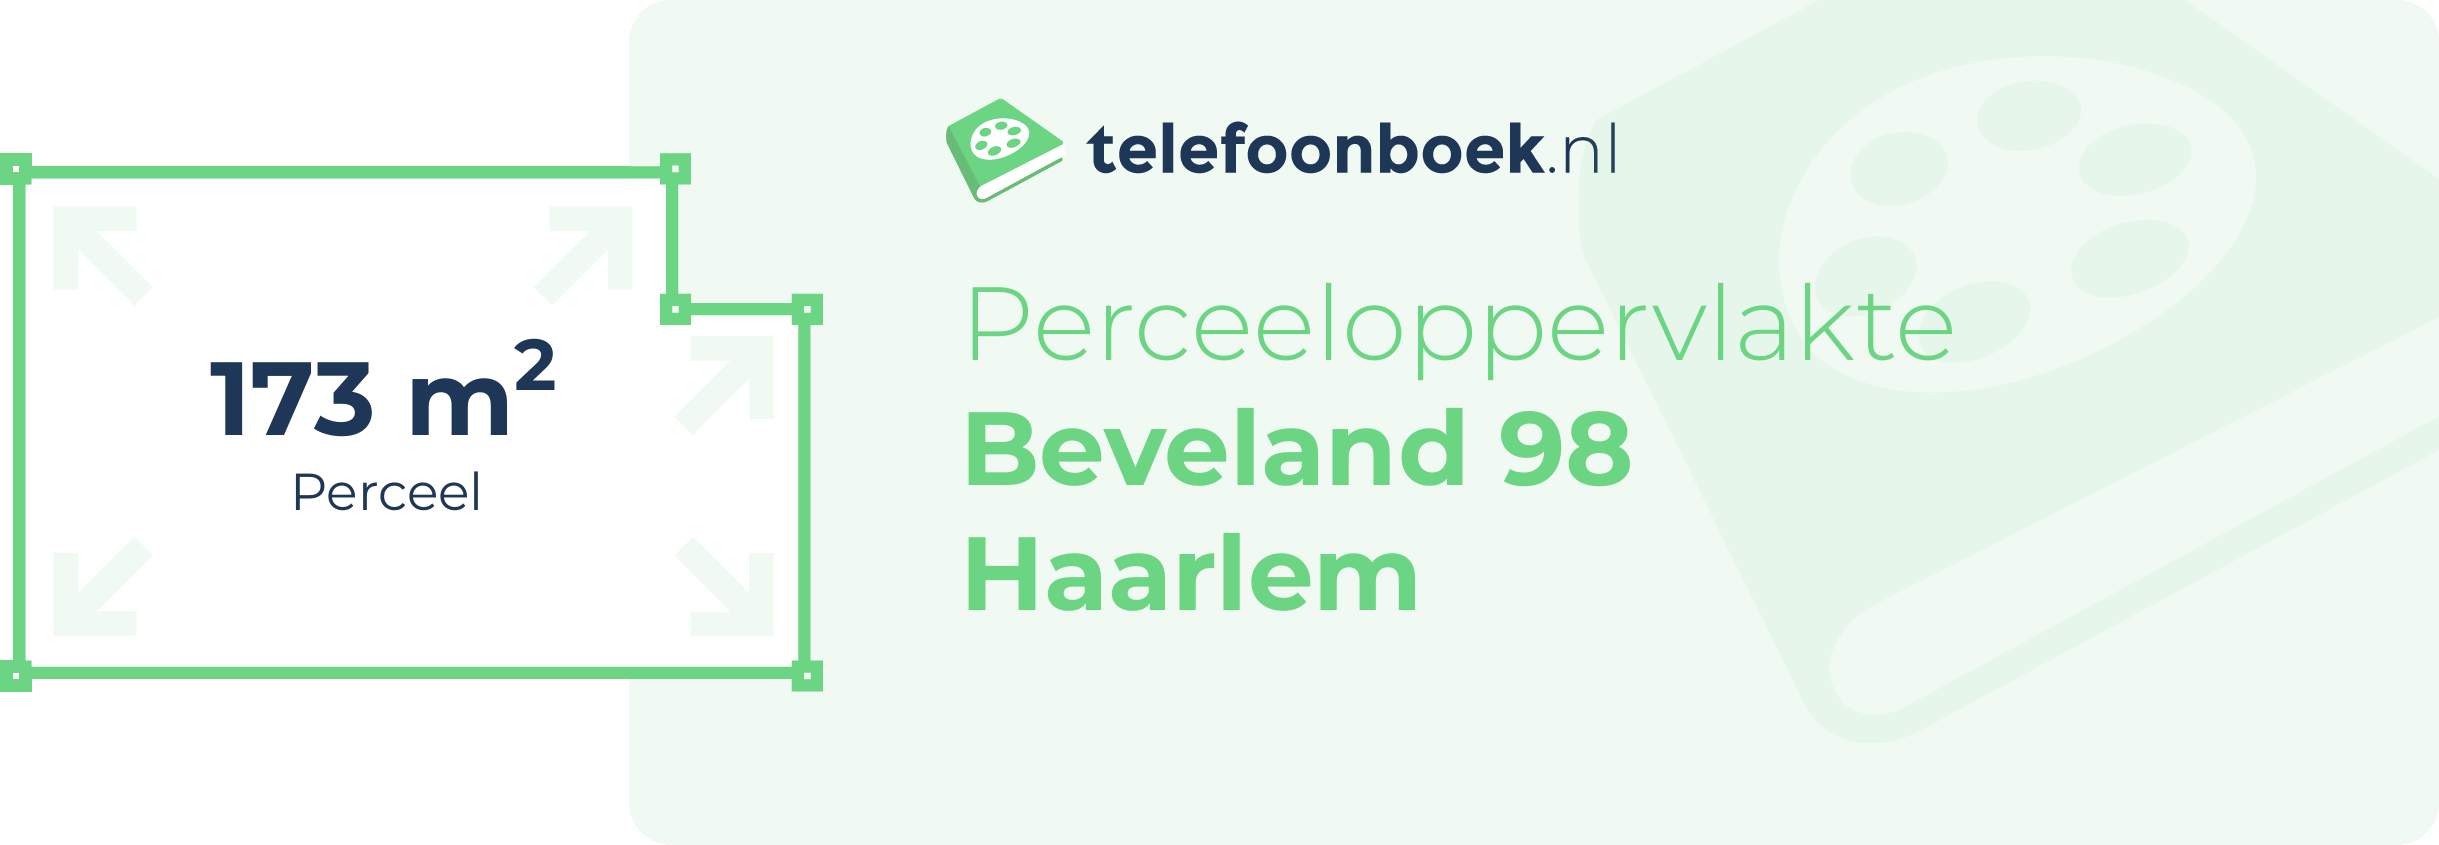 Perceeloppervlakte Beveland 98 Haarlem